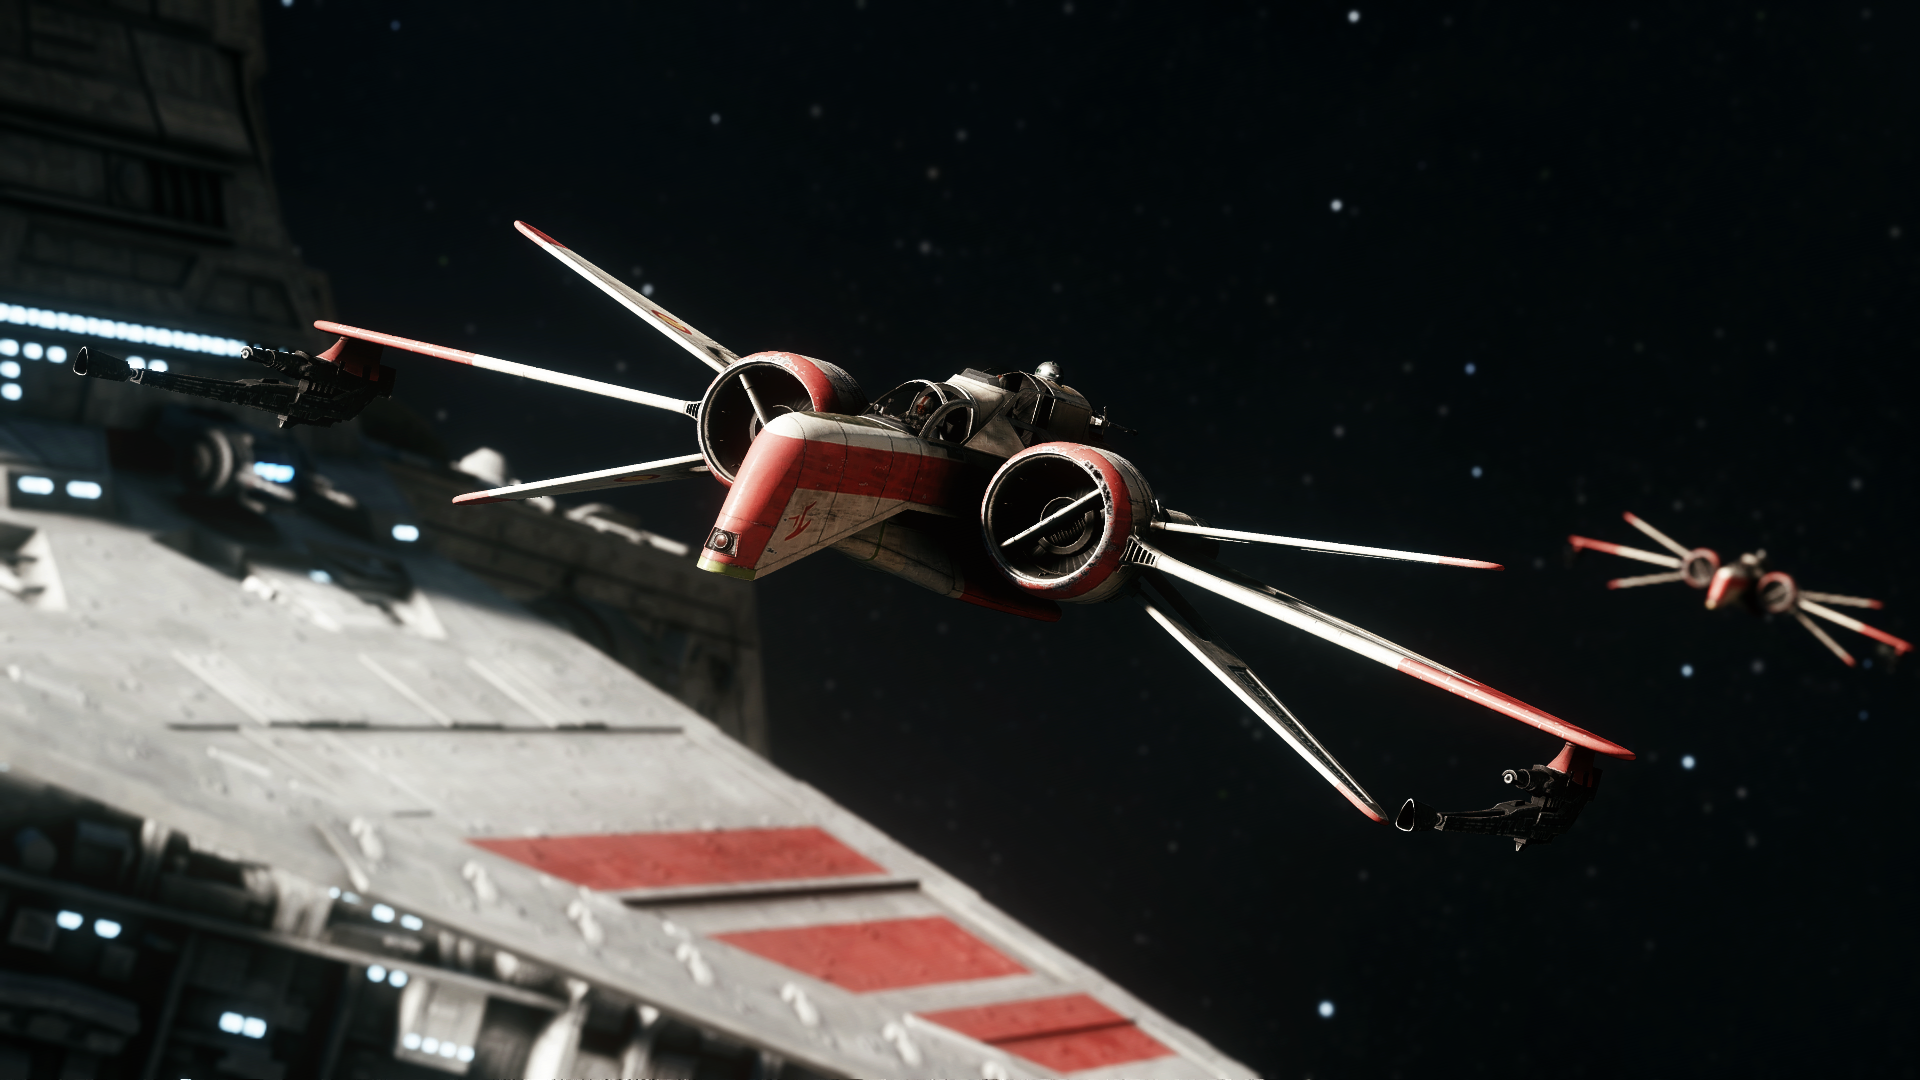 Starfighter Assault In Arcade at Star Wars: Battlefront II (2017) Nexus and community